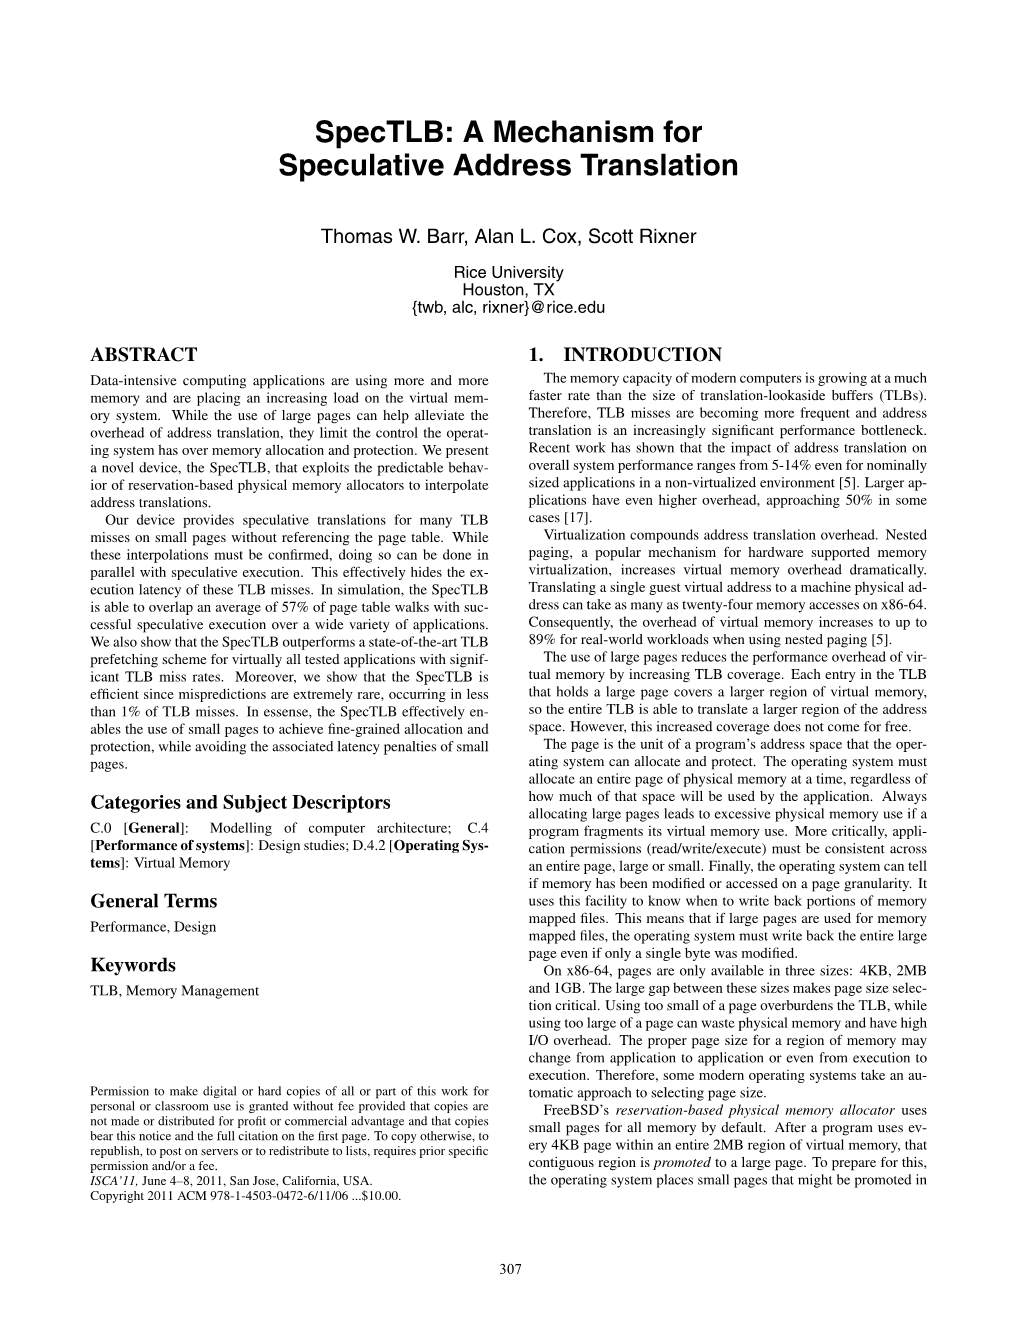 Spectlb: a Mechanism for Speculative Address Translation